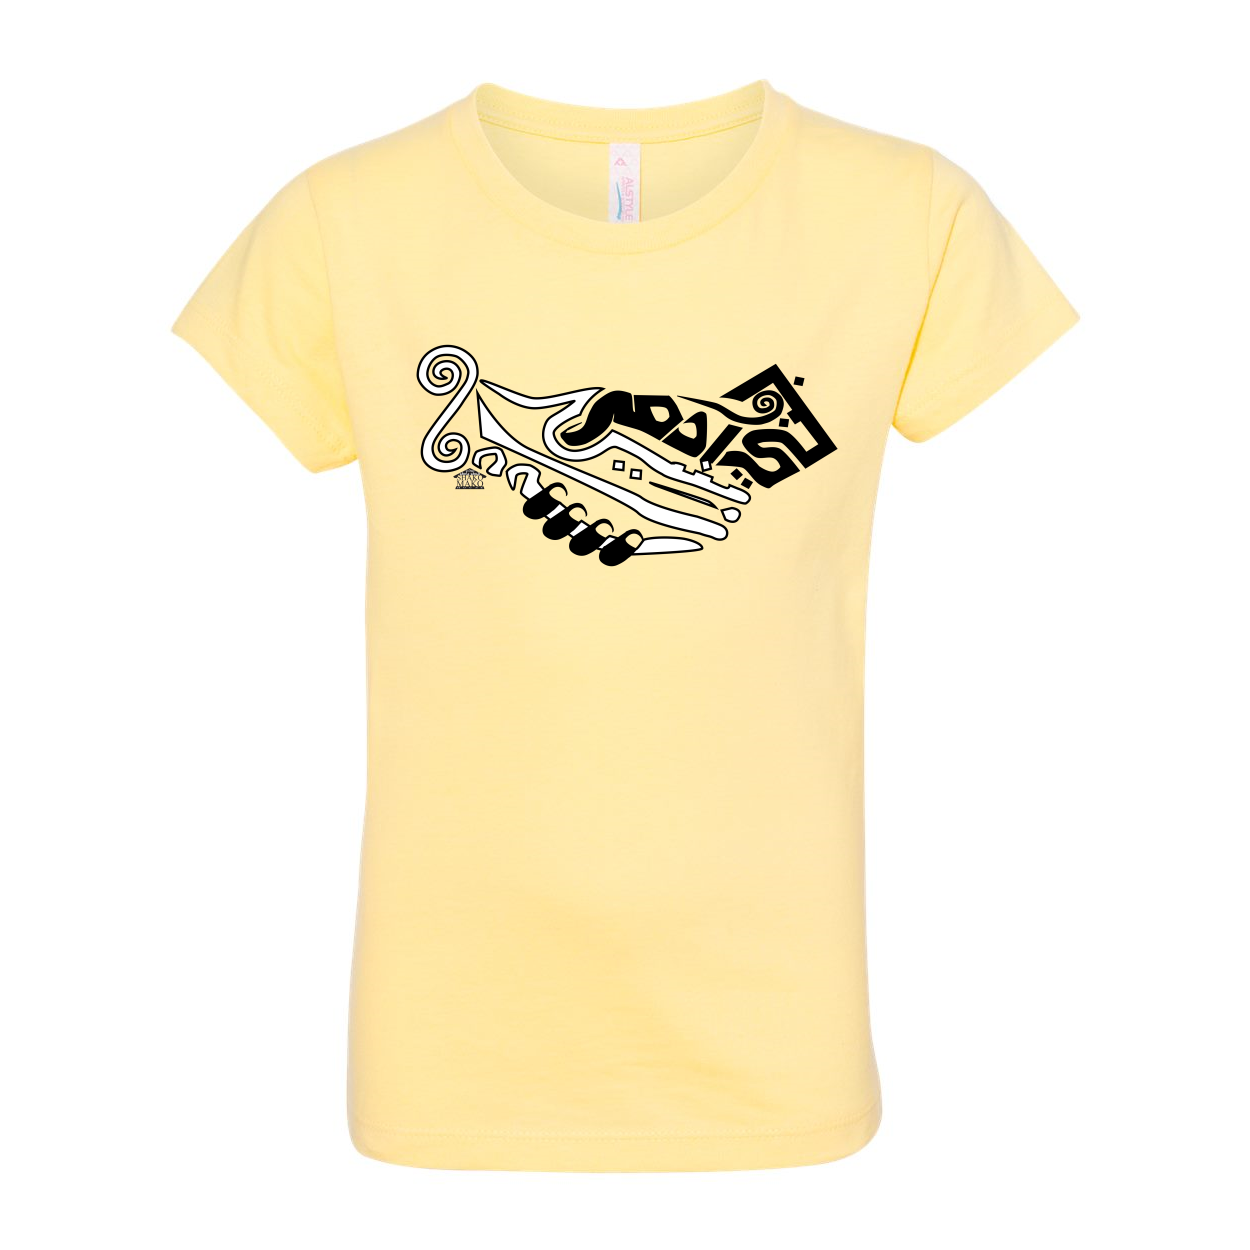 Banee Adam Girls’ Ultimate T-Shirt